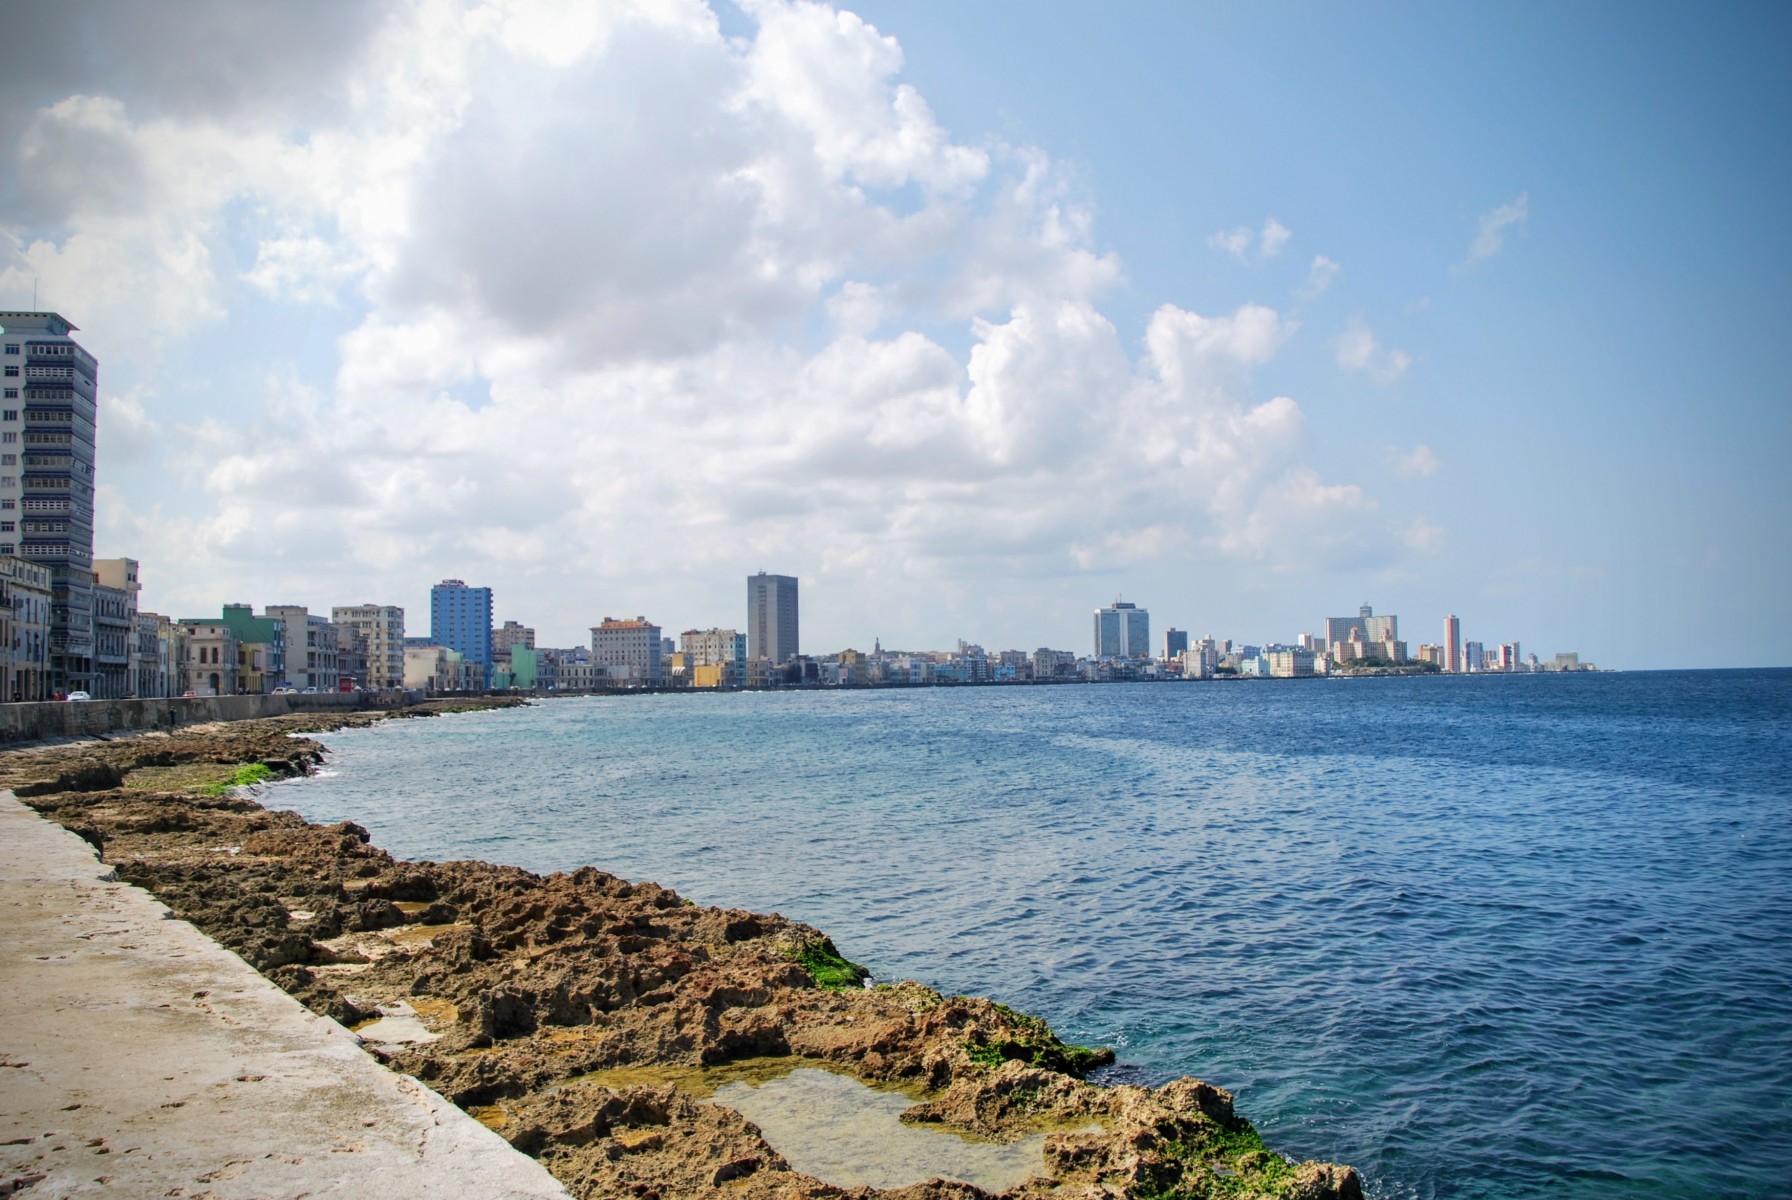 La Habana - Malecón